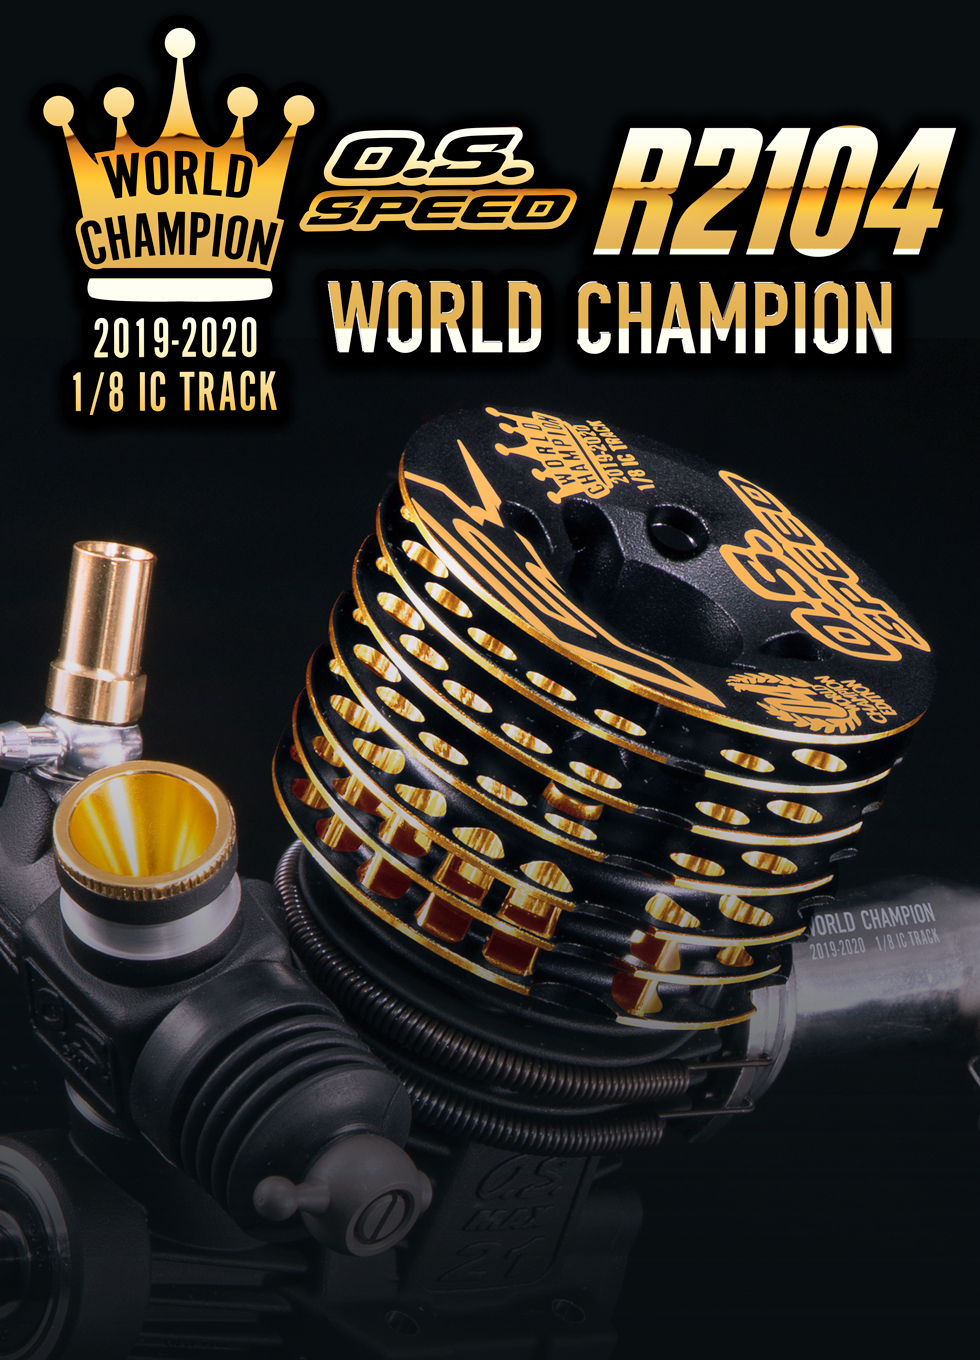 O.S.SPEED R2104 WORLD CHAMPION